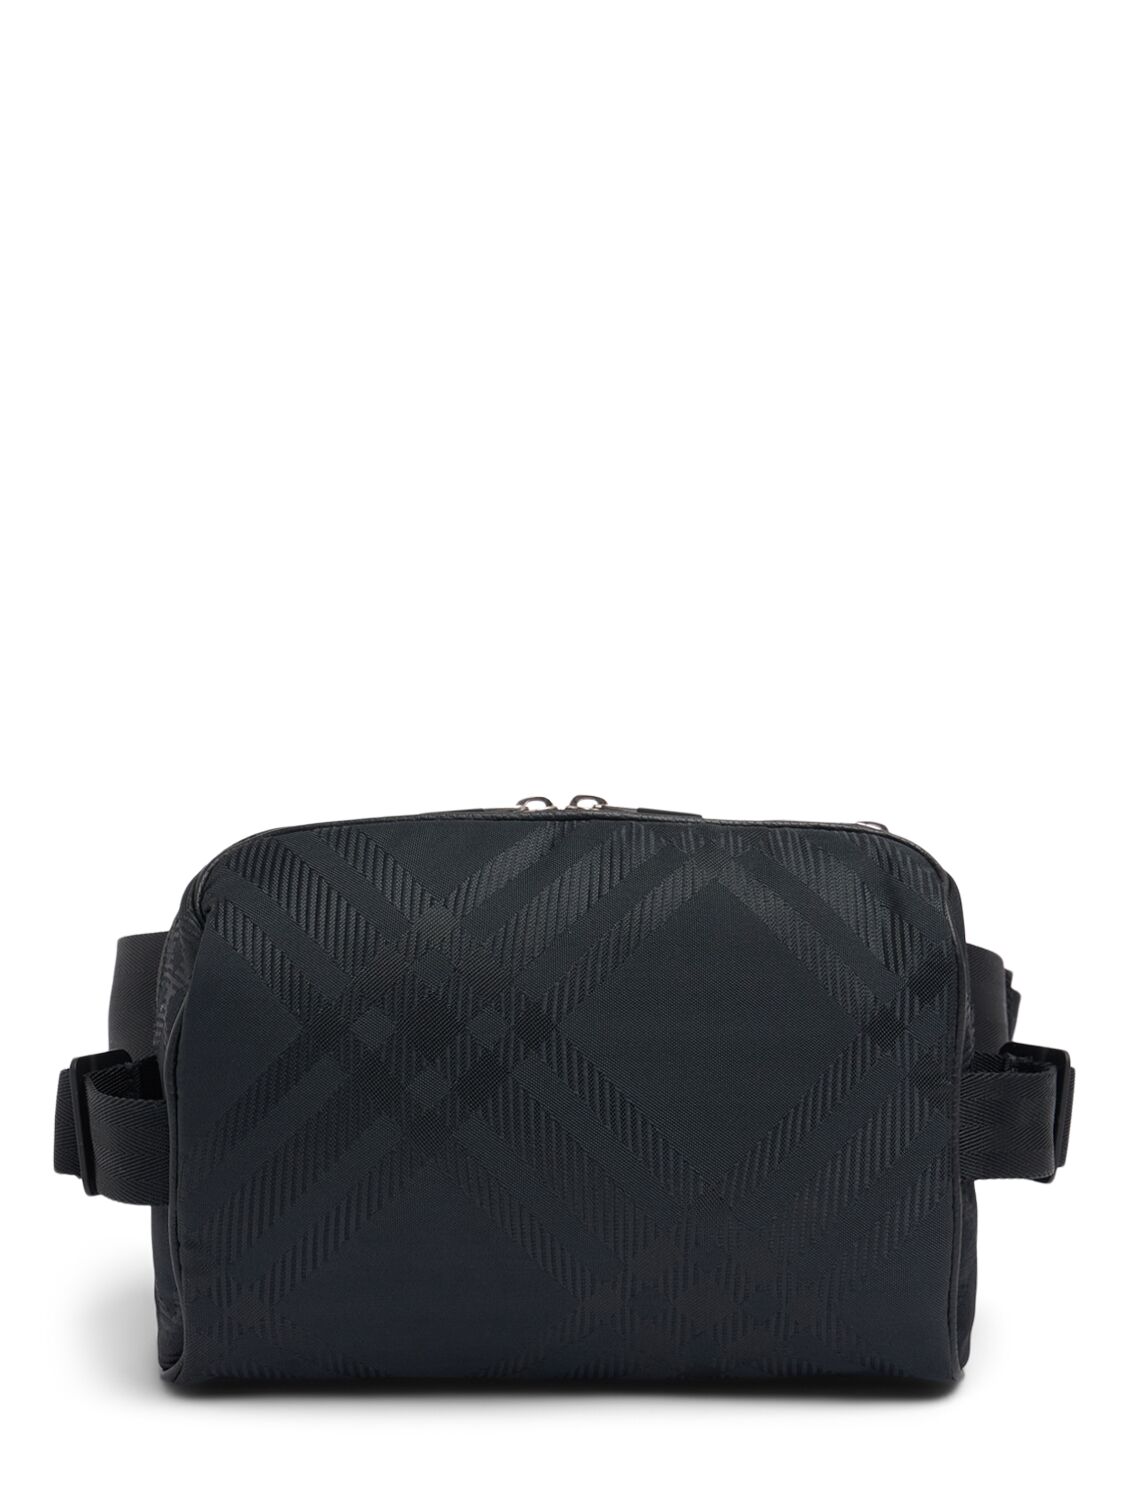 Burberry Check Print Jacquard Belt Bag In Black